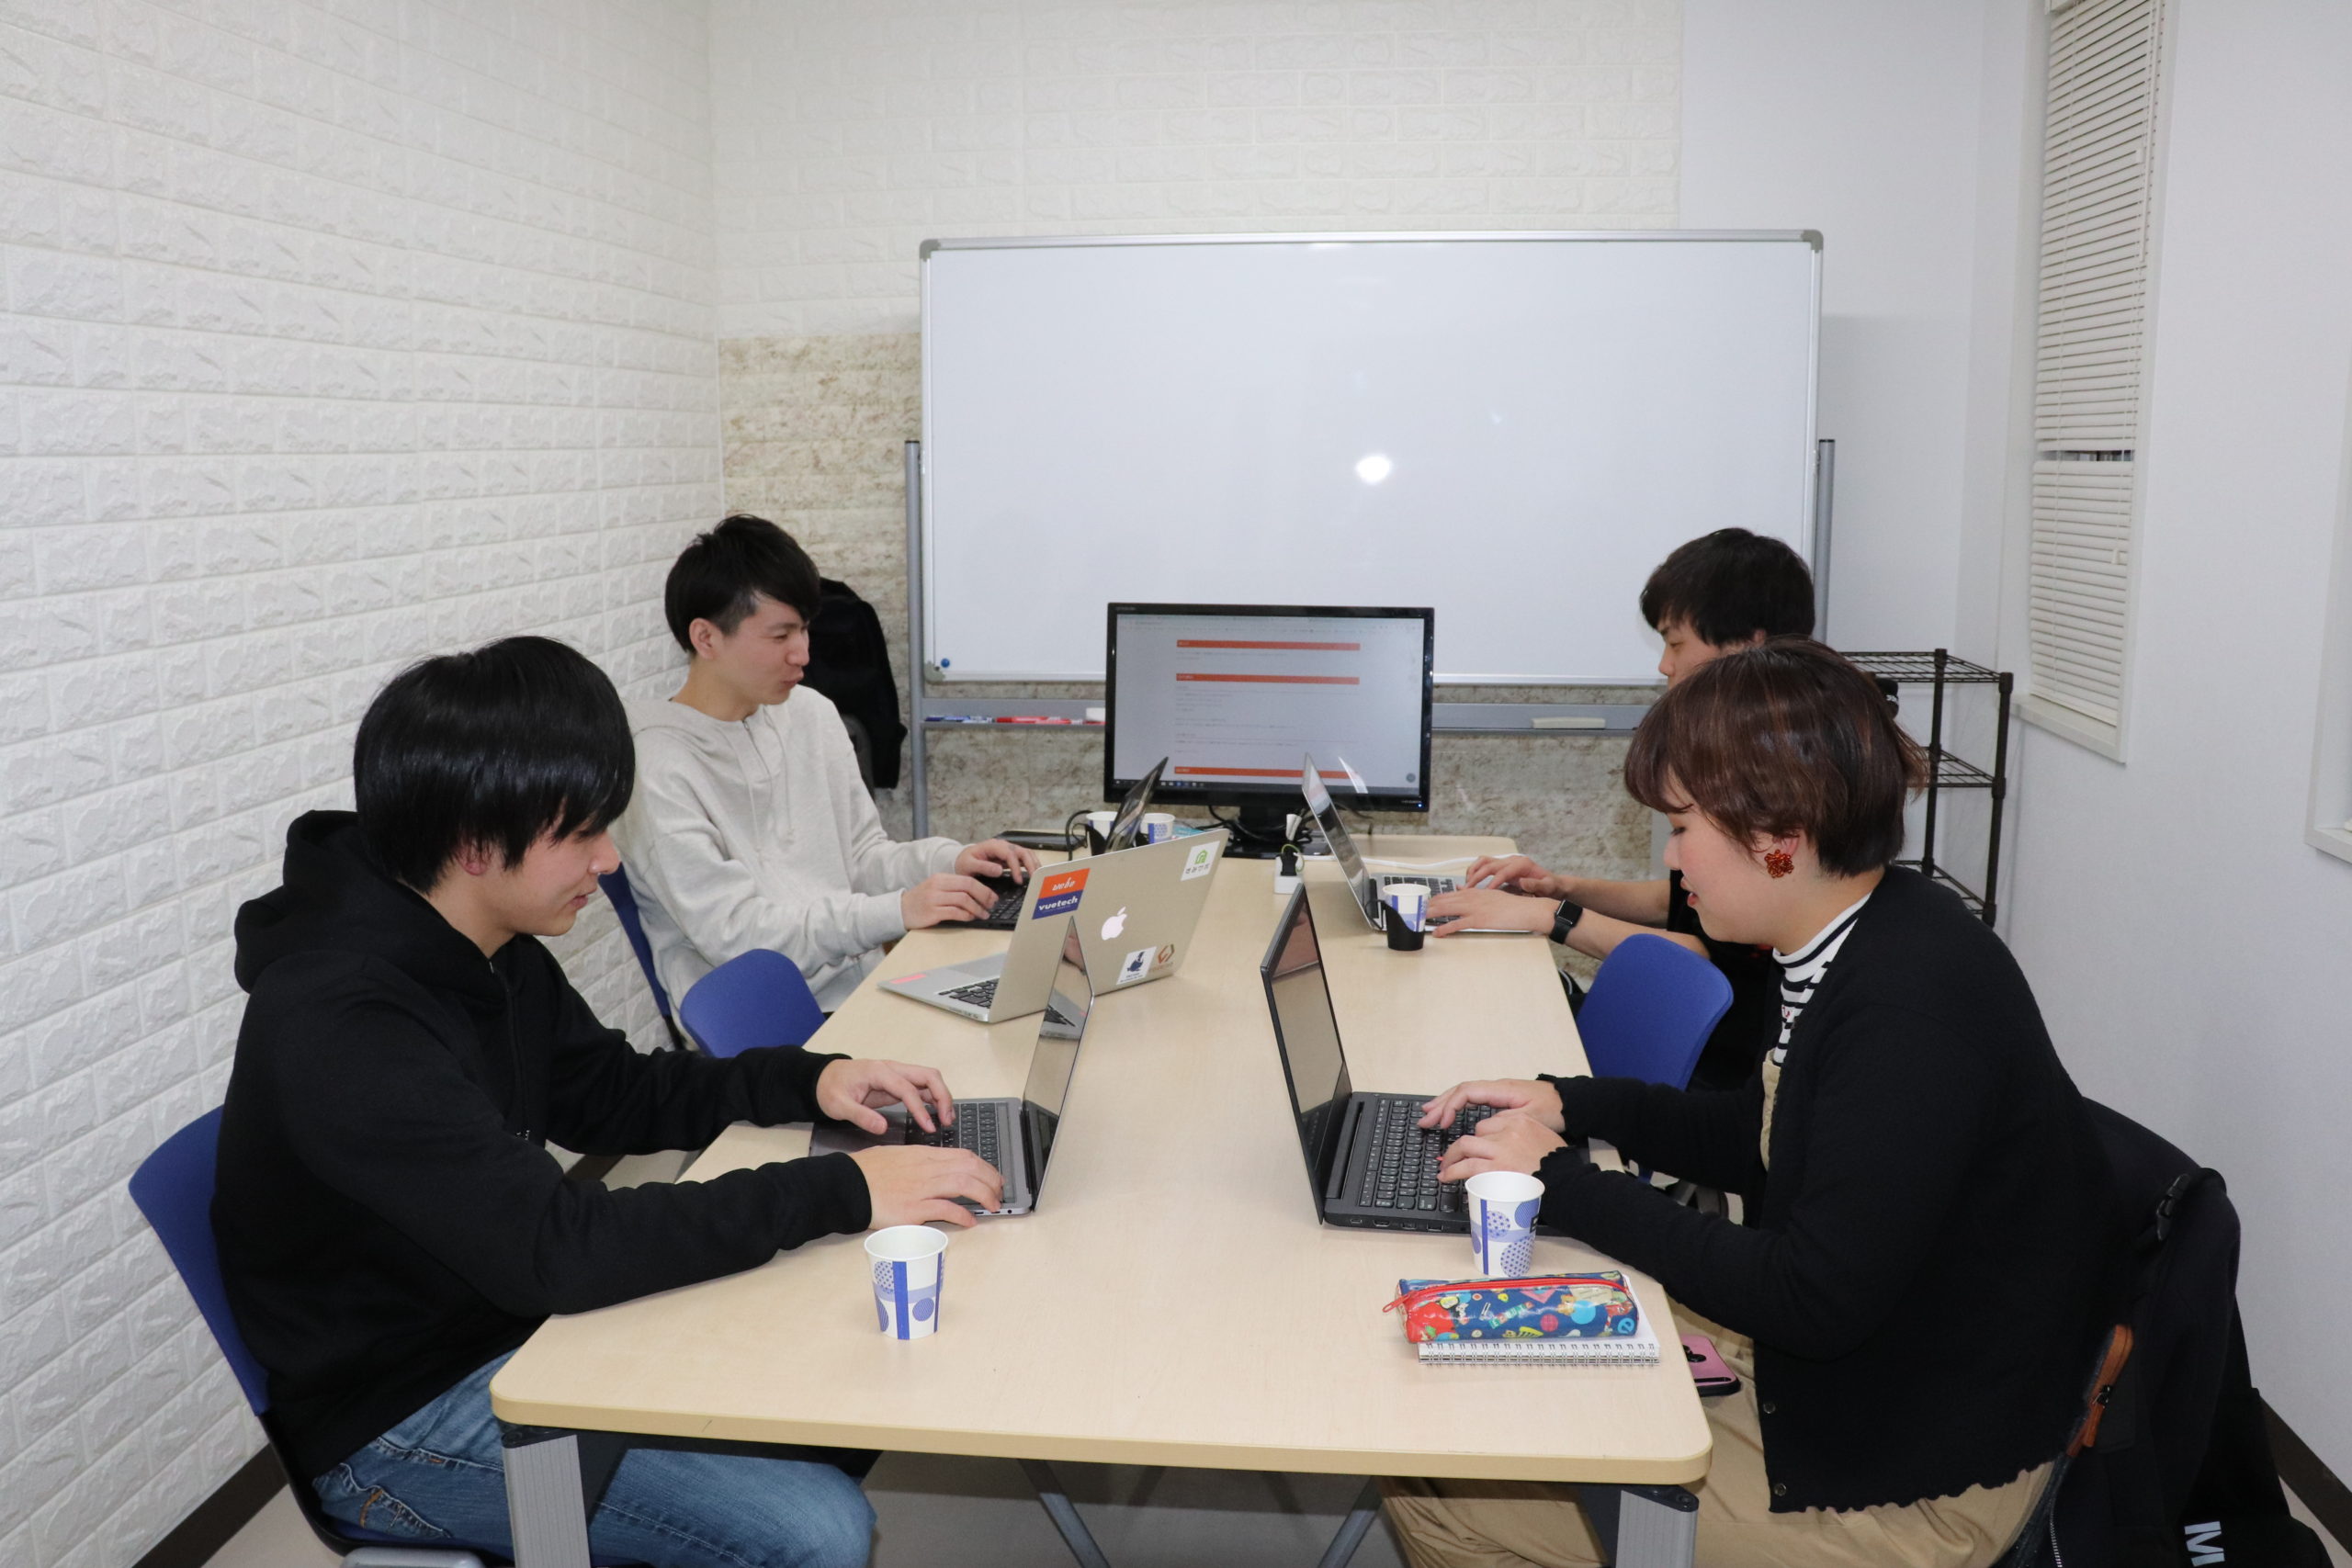 codelab.（コードラボ）-  群馬県高崎市・渋川市の対面式WEBプログラミングスクール